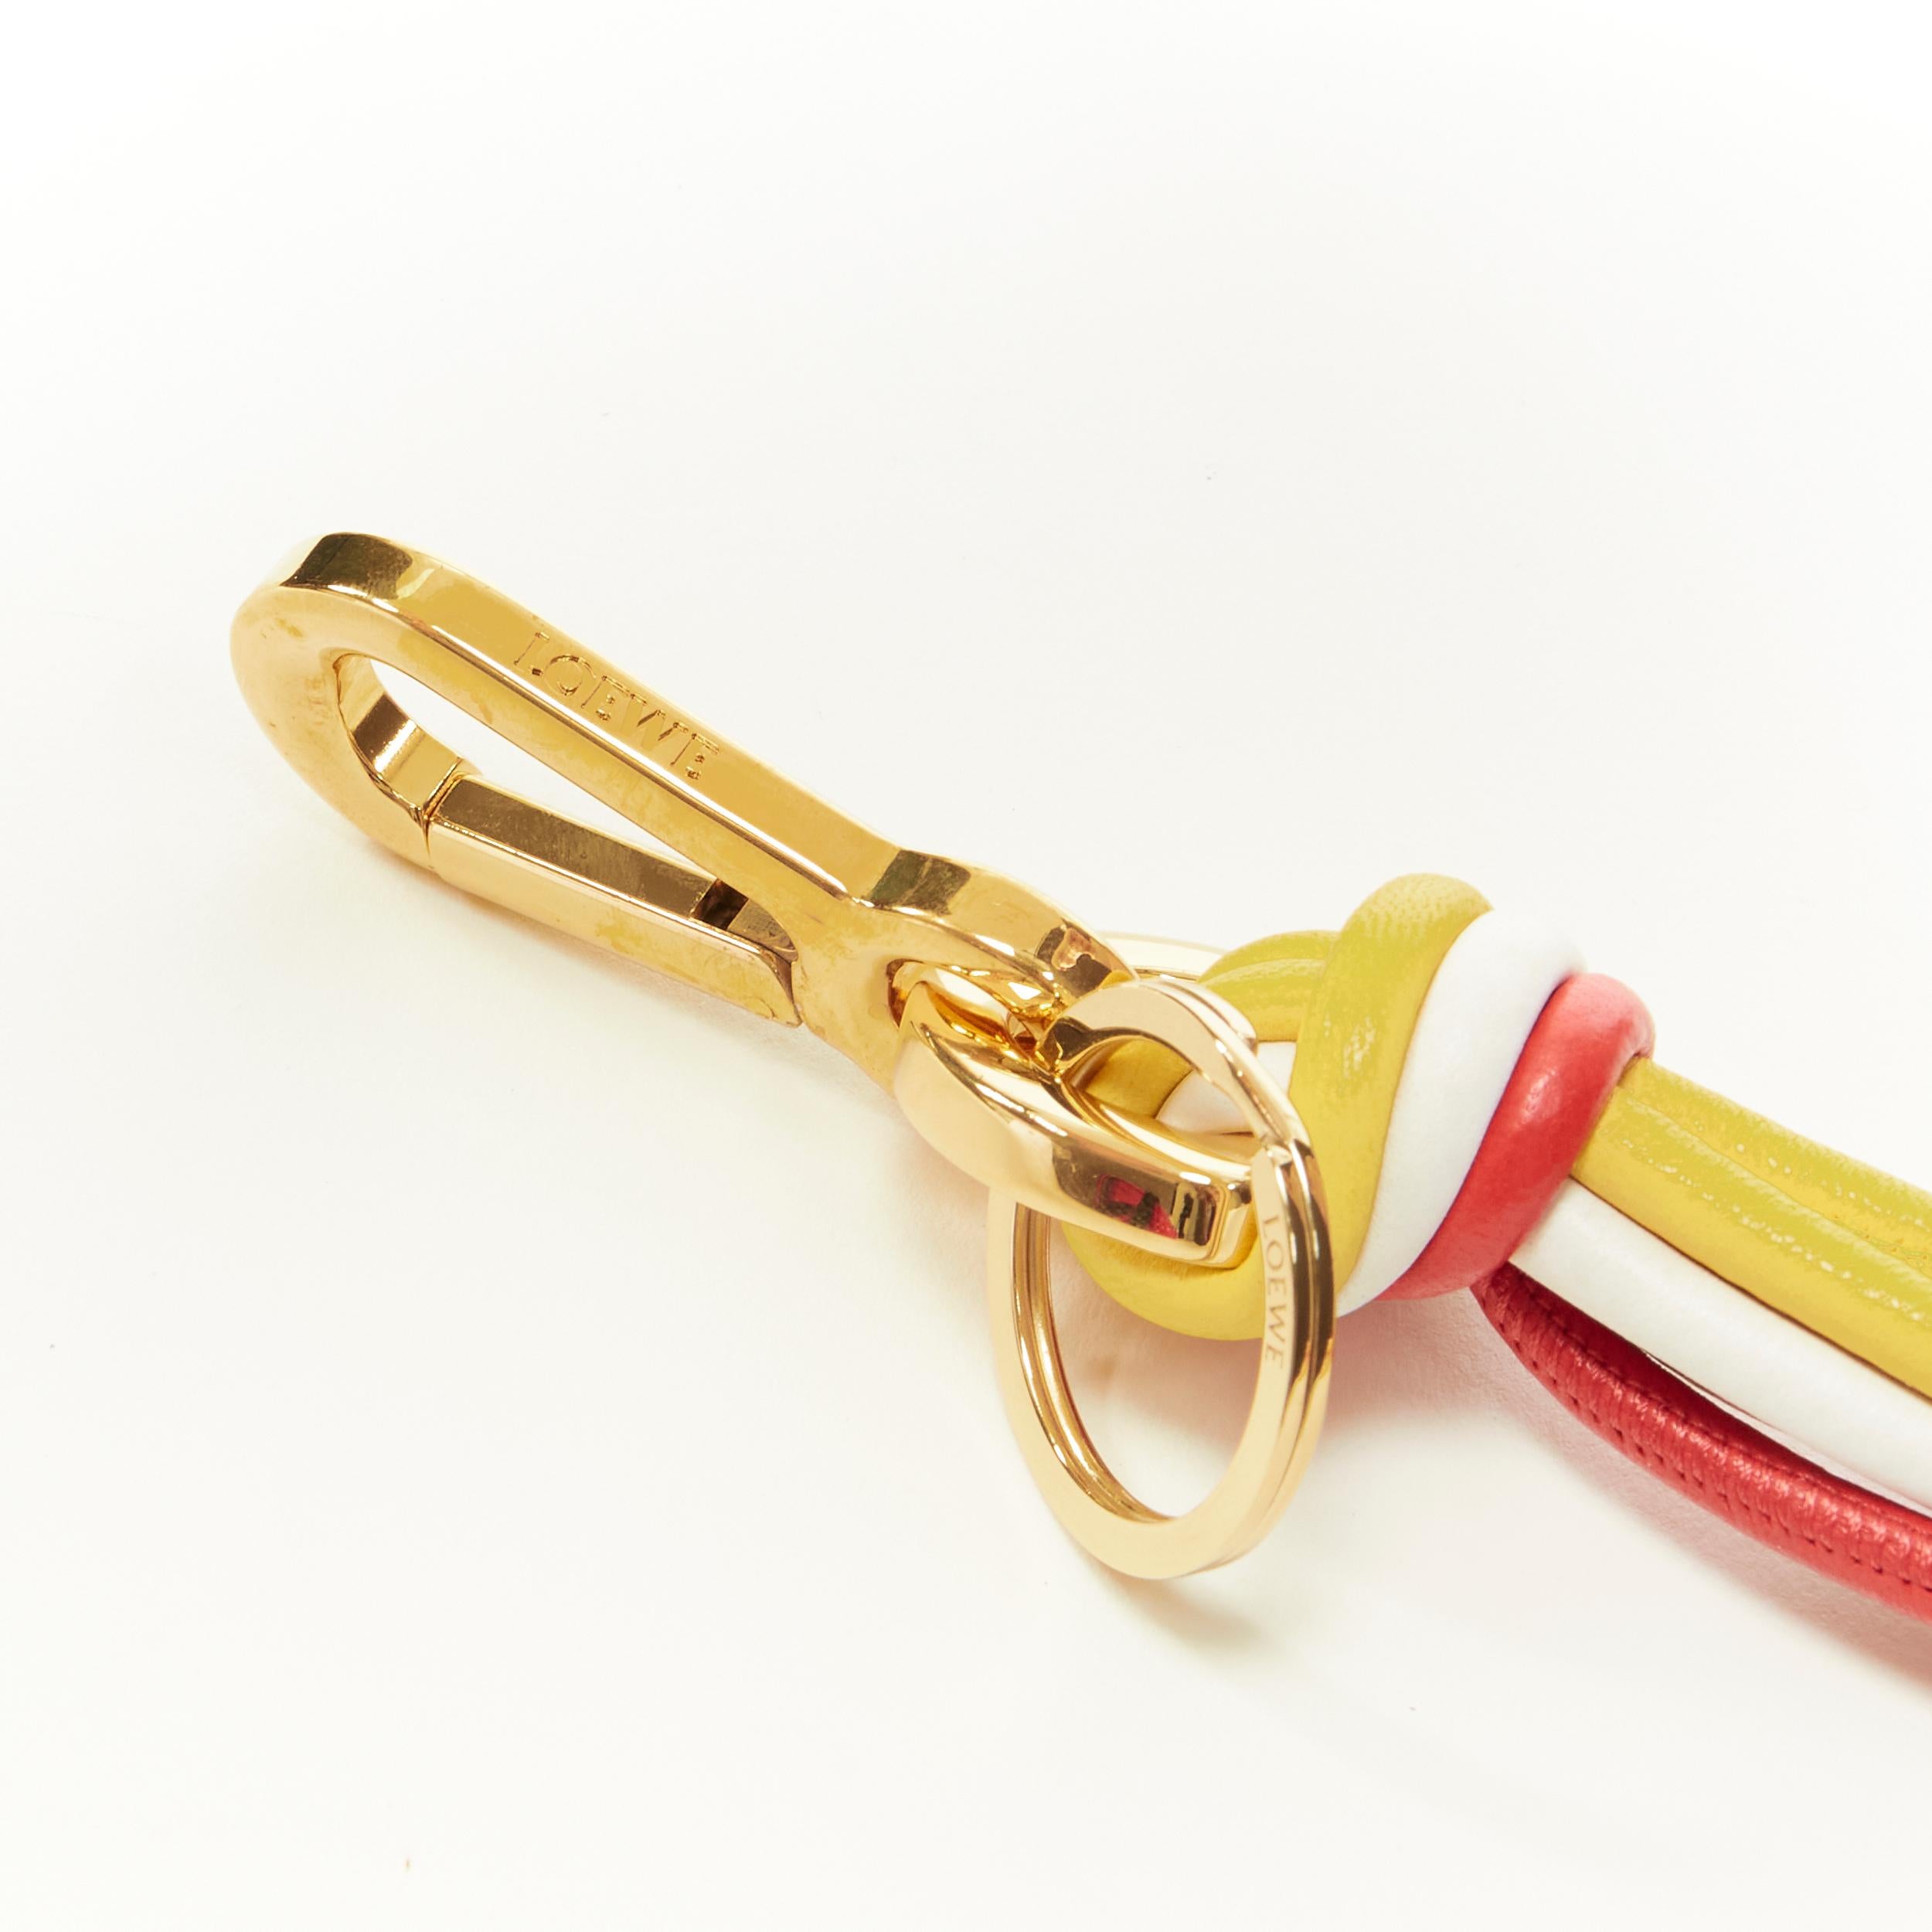 Women's LOEWE leather cord wire gold-tone metal plug bag charm keyring